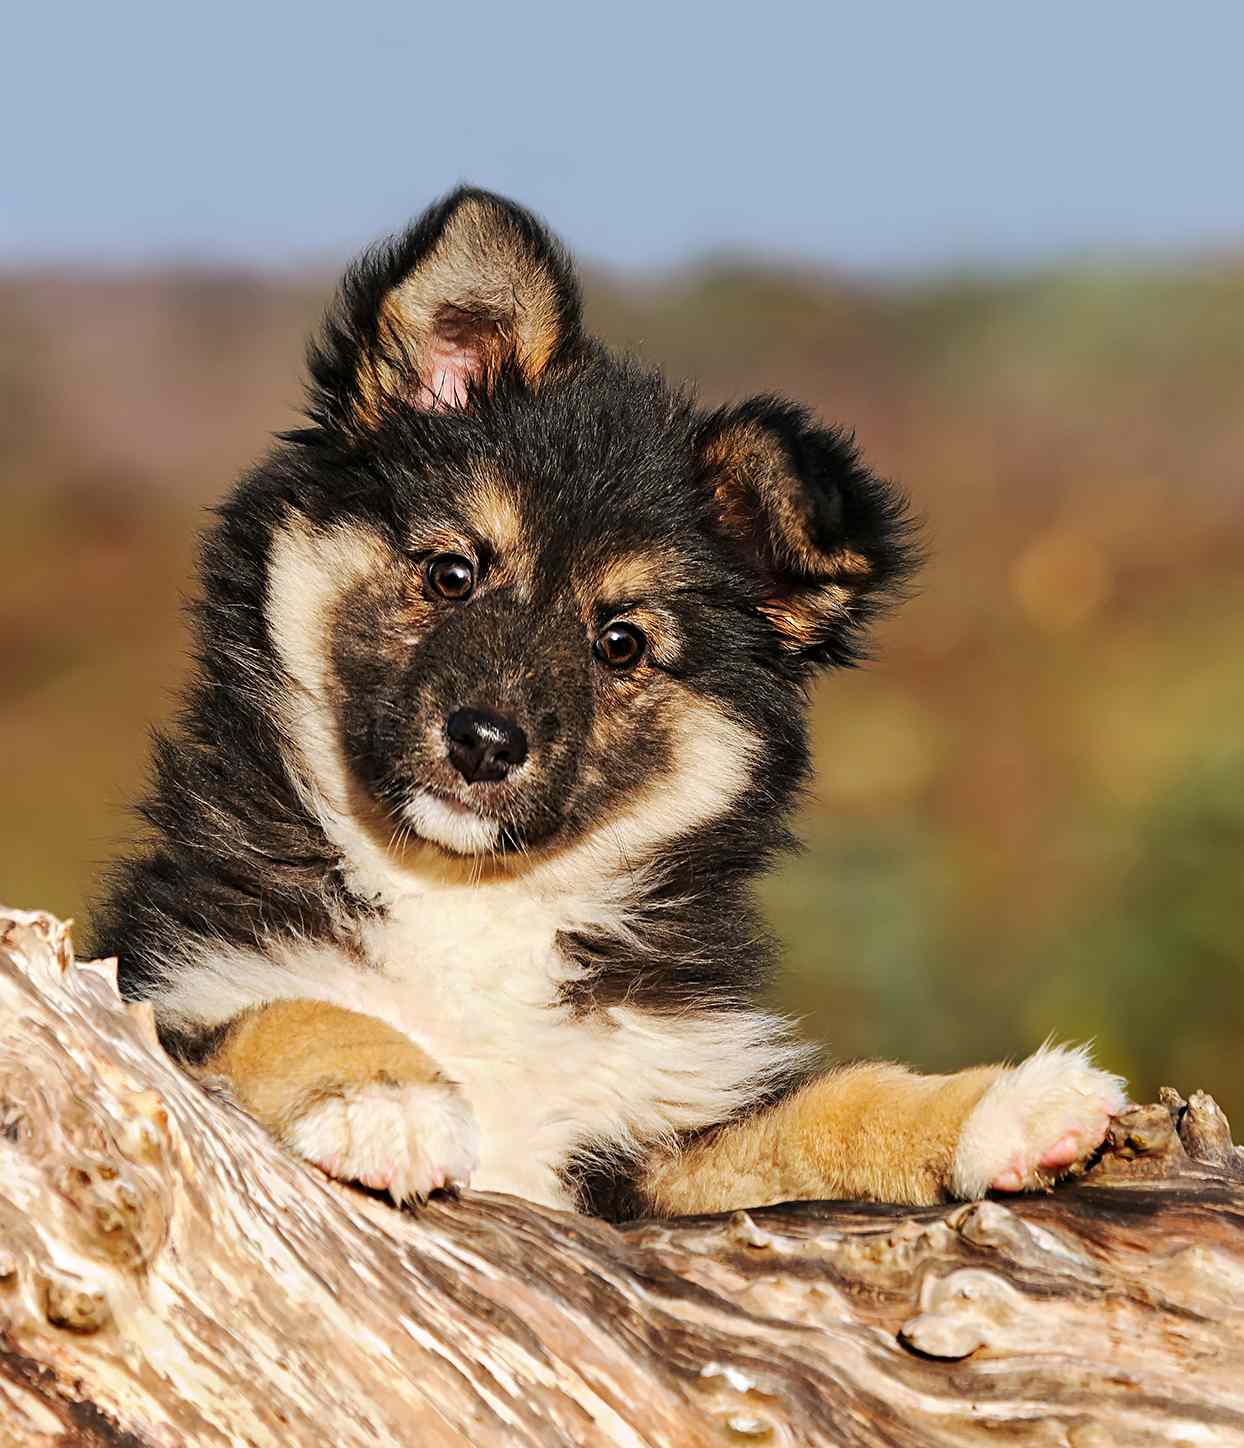 tricolor icelandic sheepdog puppy sitting on a log